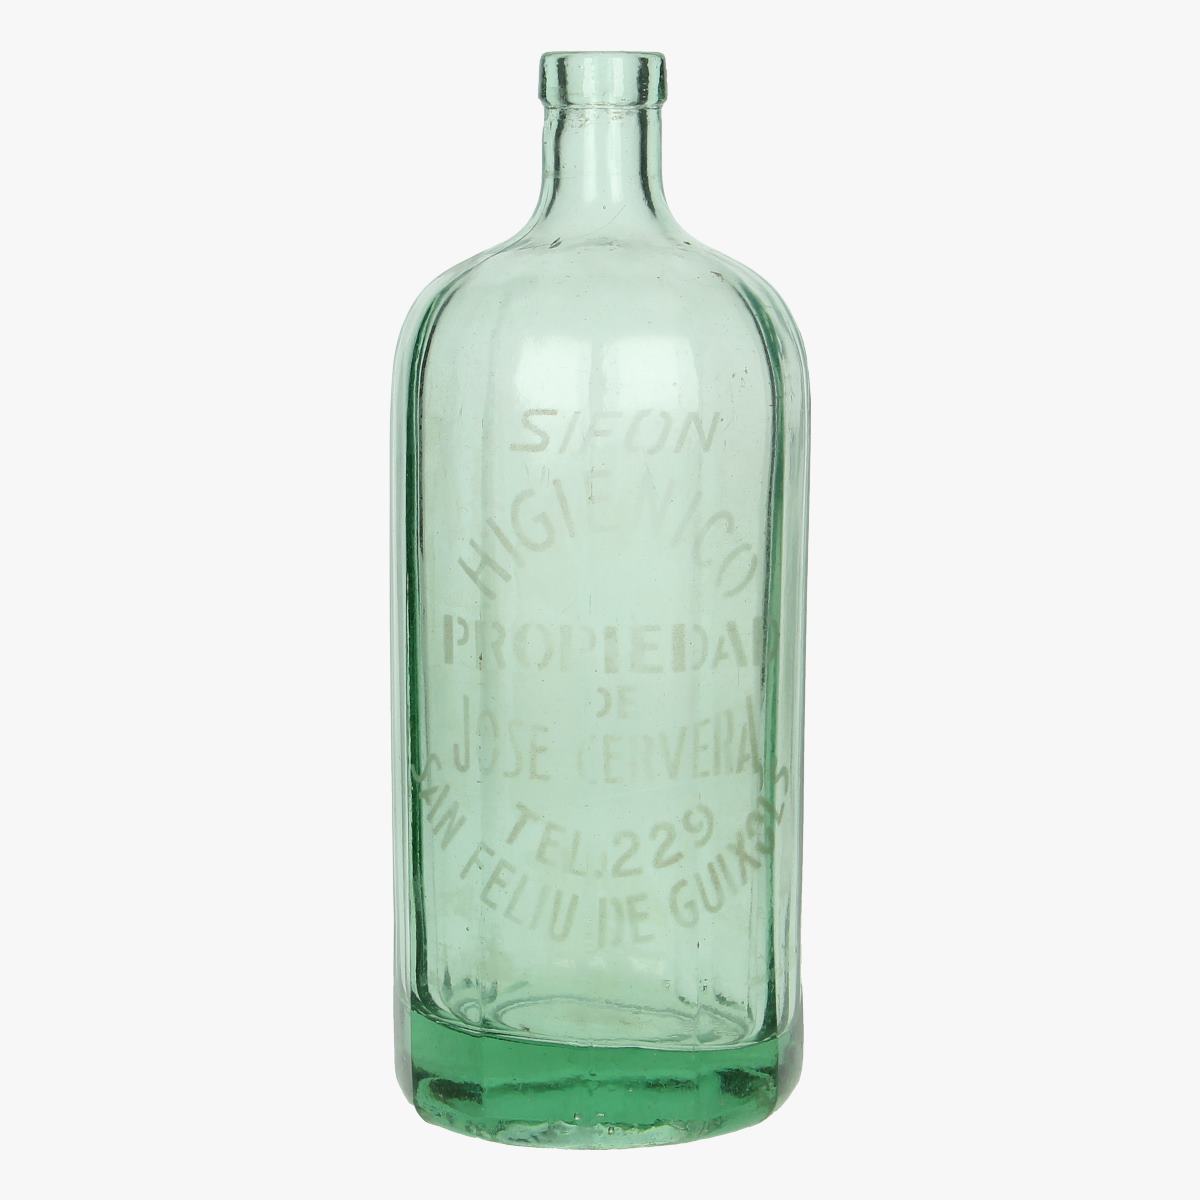 Afbeeldingen van oude soda fles san feliu de guixols sifon higienico propiedad de jose cervera 